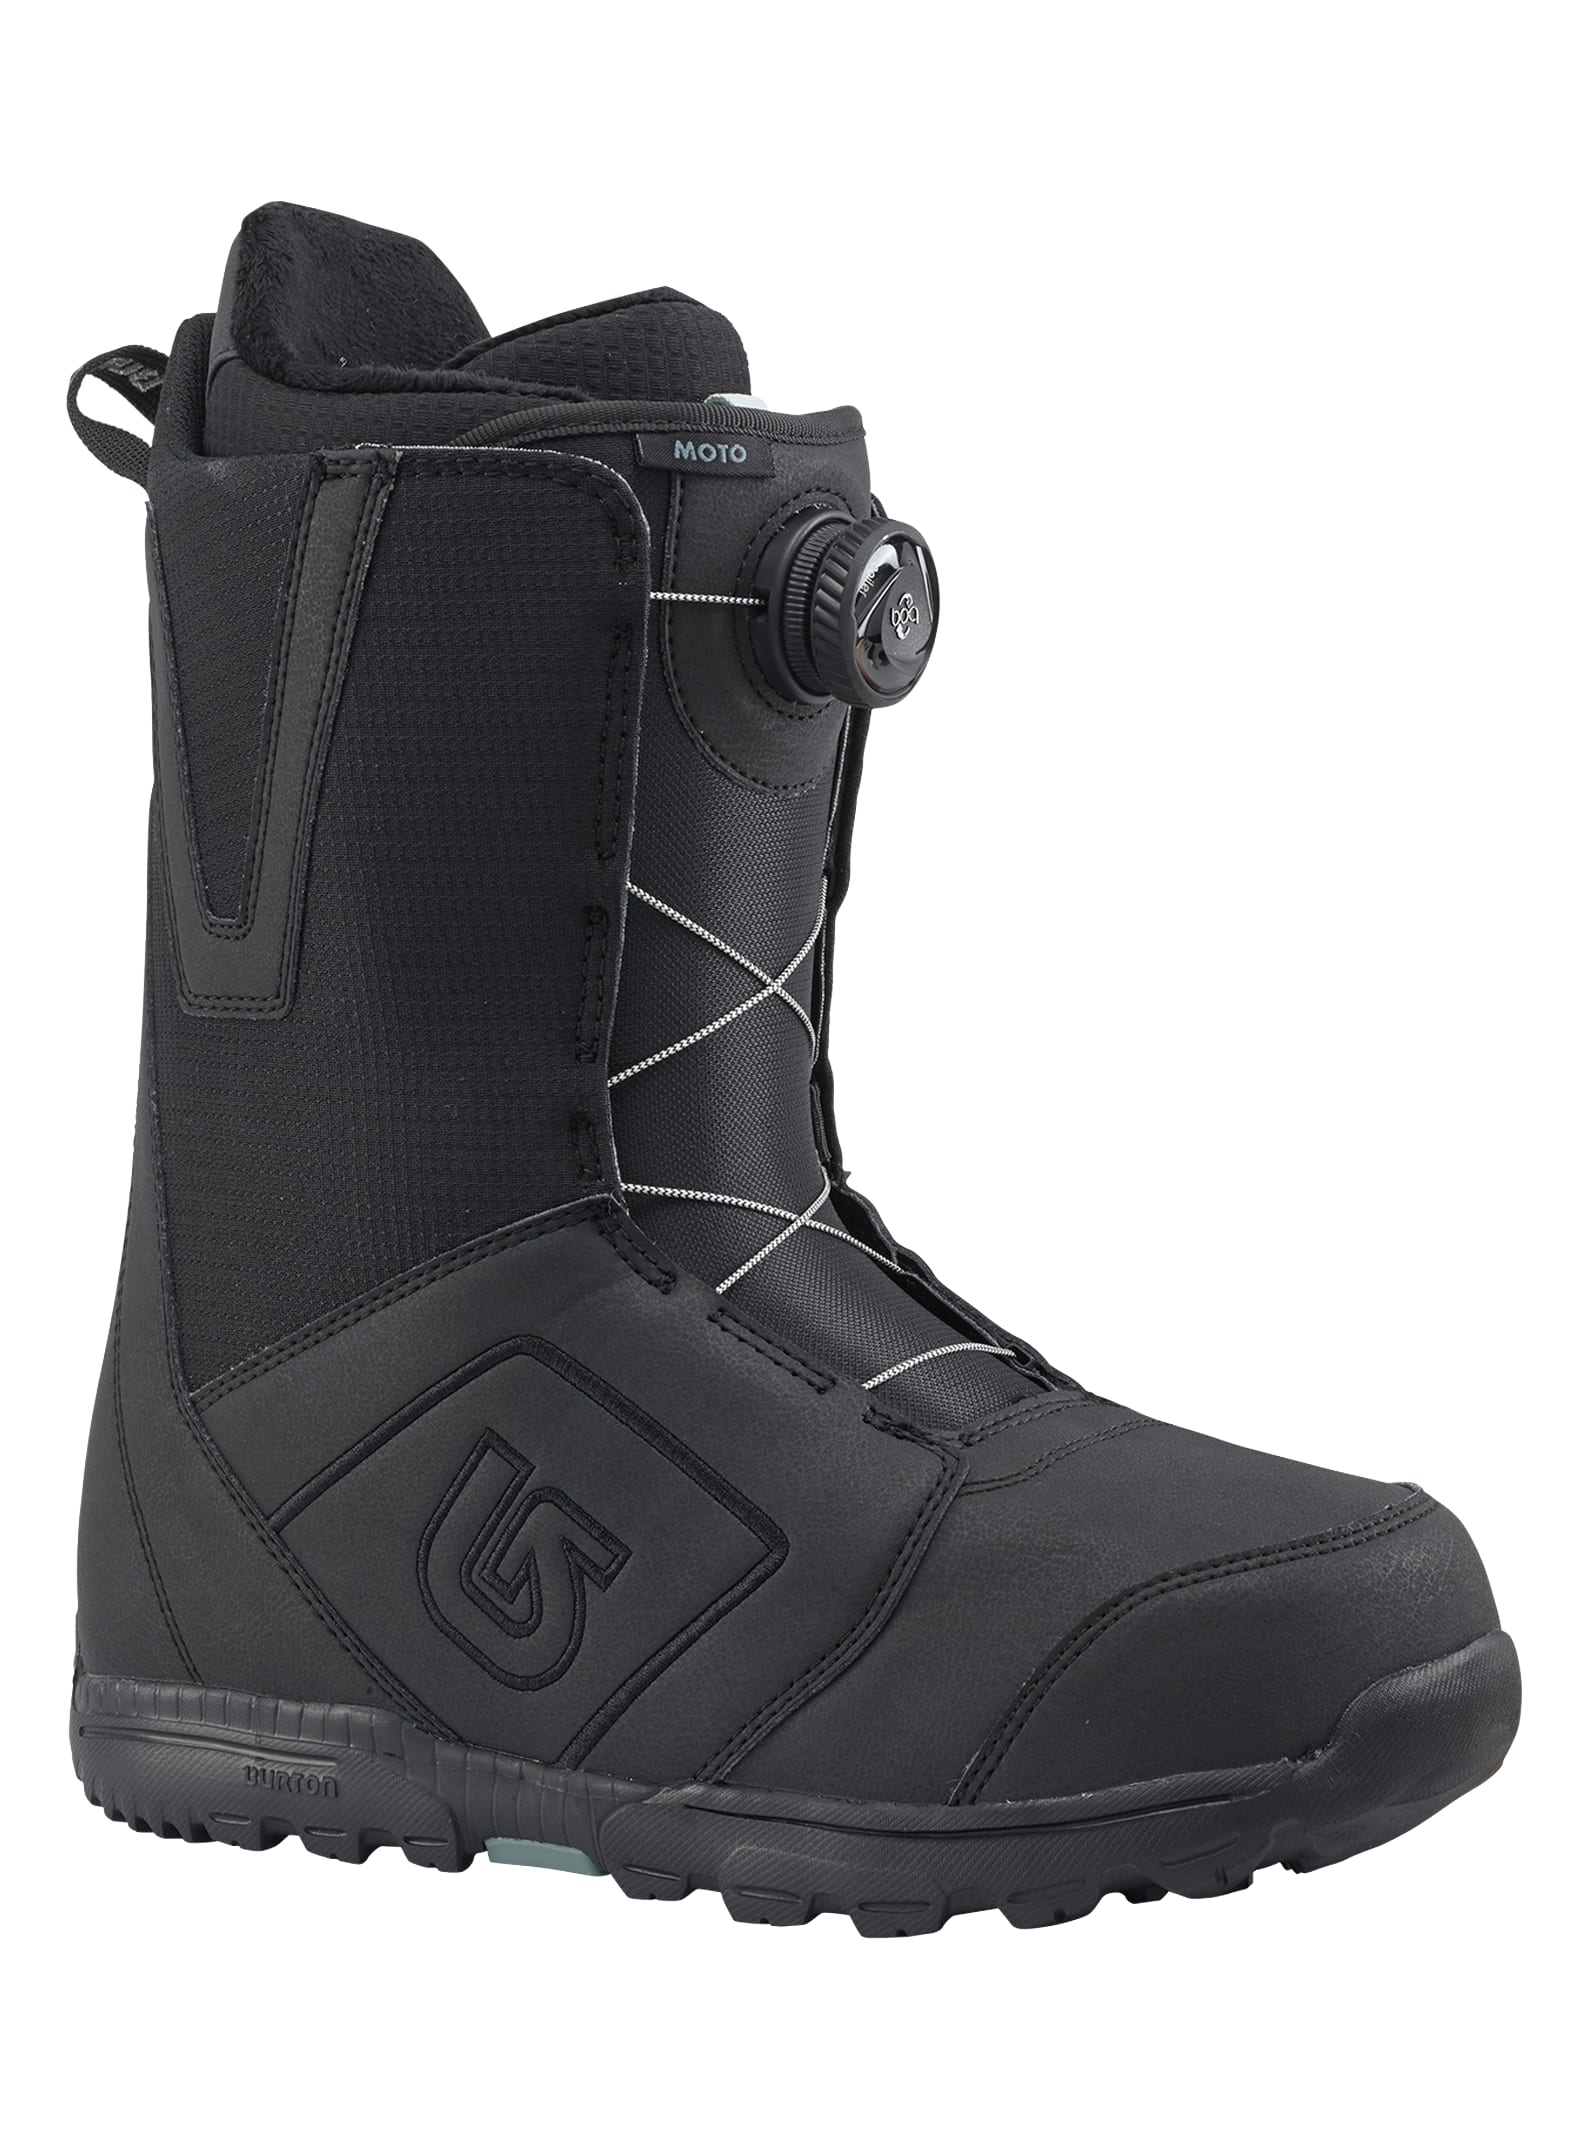 Burton - Boots de snowboard Moto Boa® homme, Black, 14